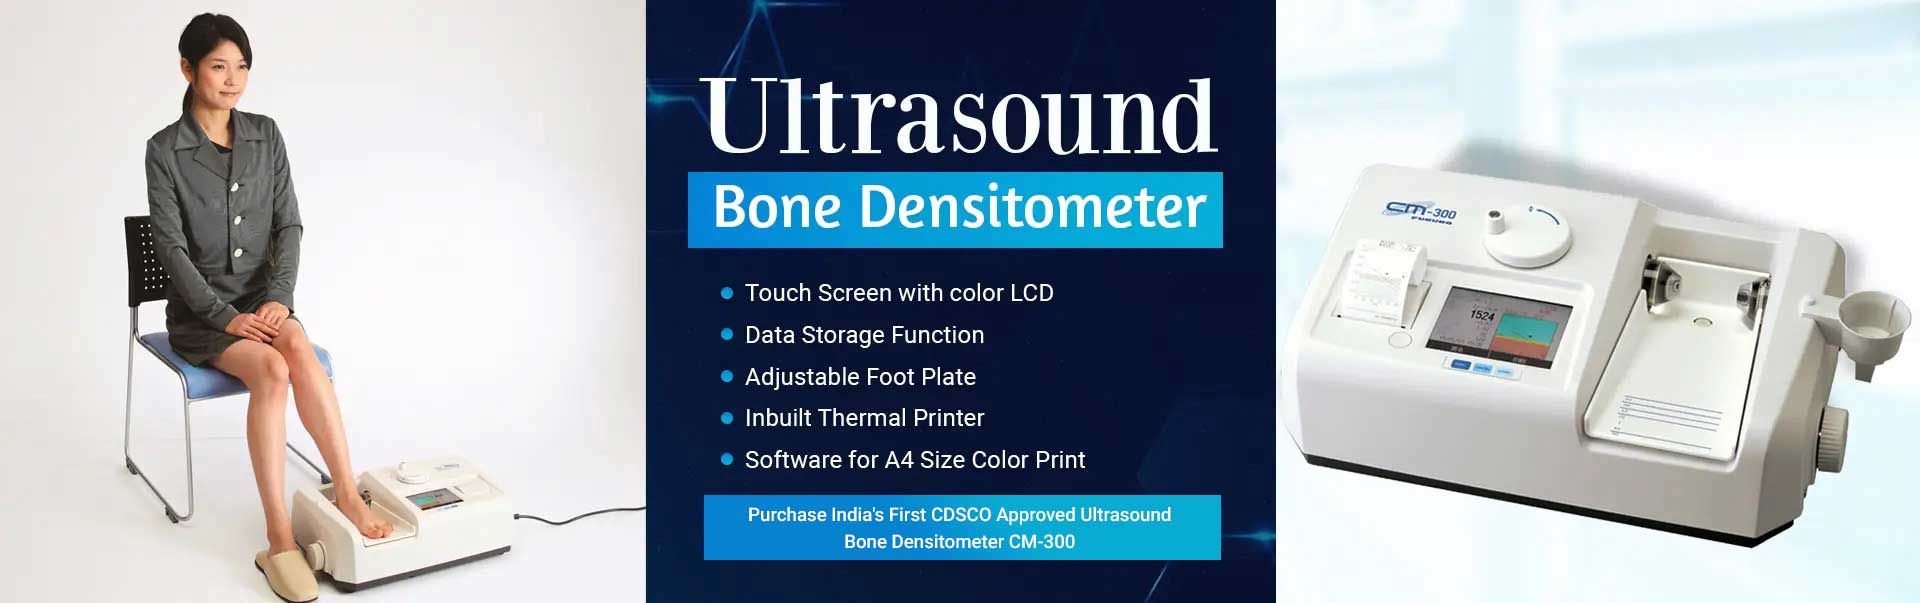 Ultrasound Bone Densitometer Manufacturers in Raipur